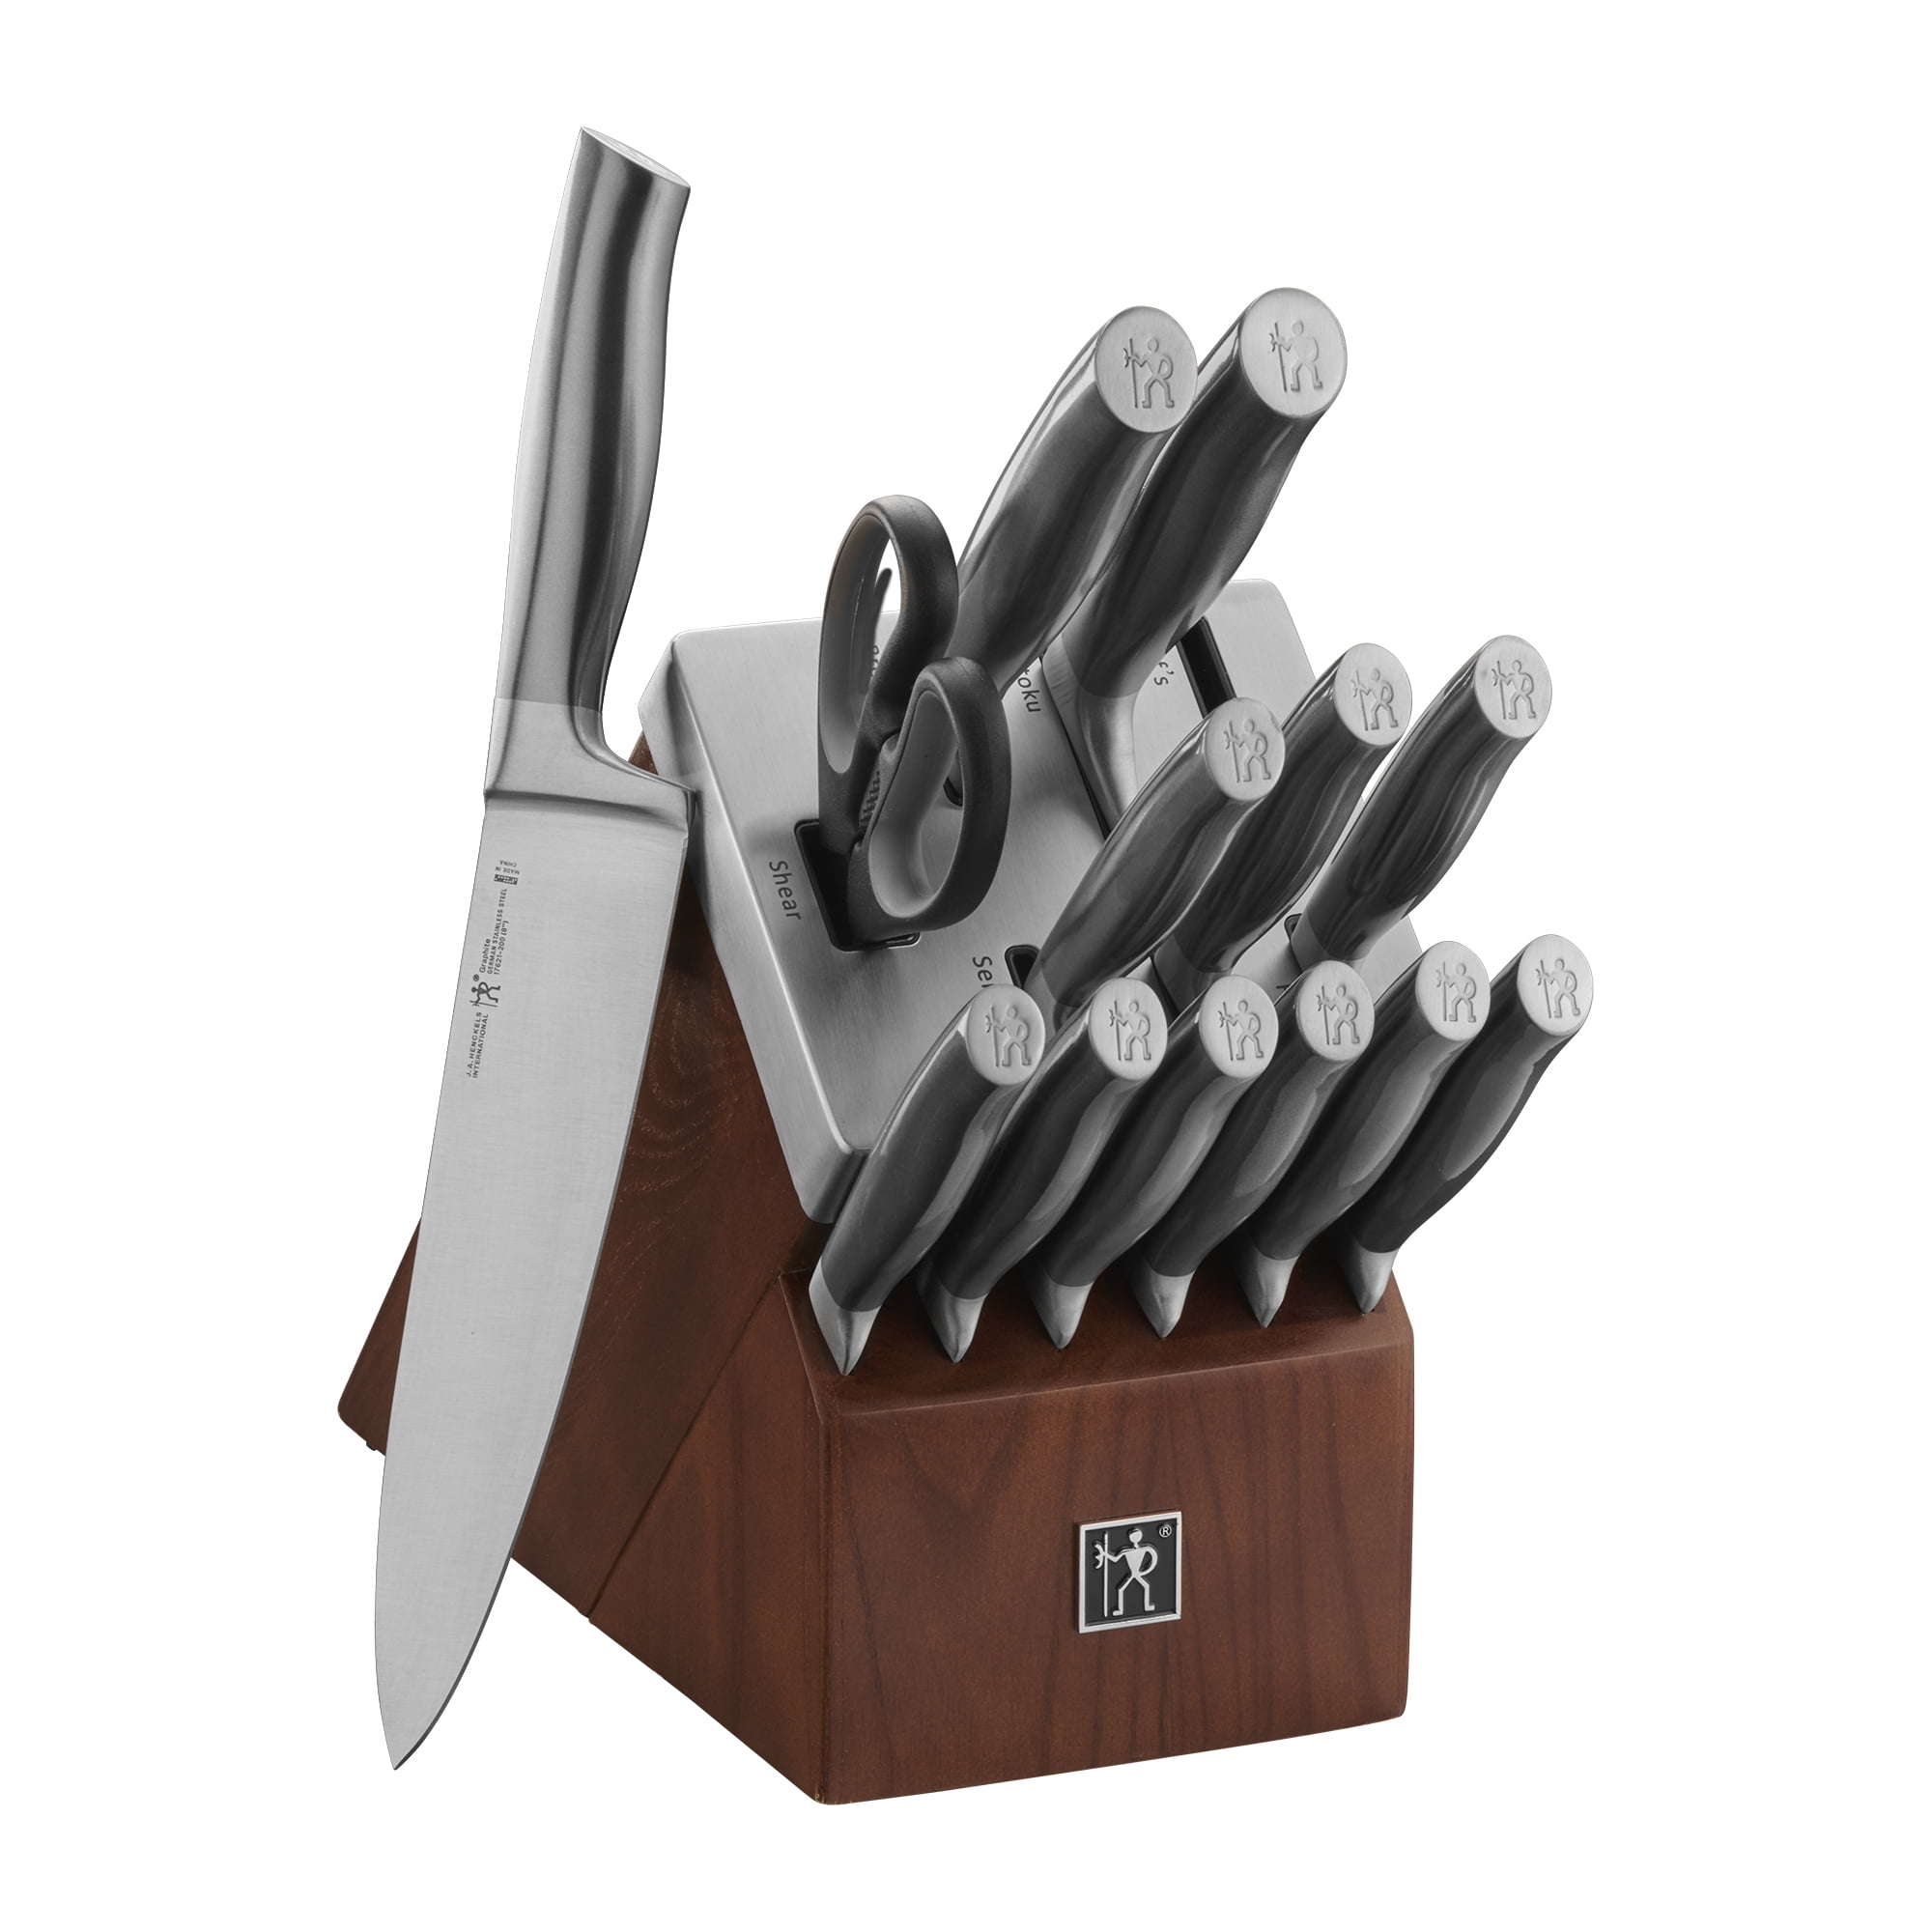 Henckels Forged Graphite 15pc Knife Block Set